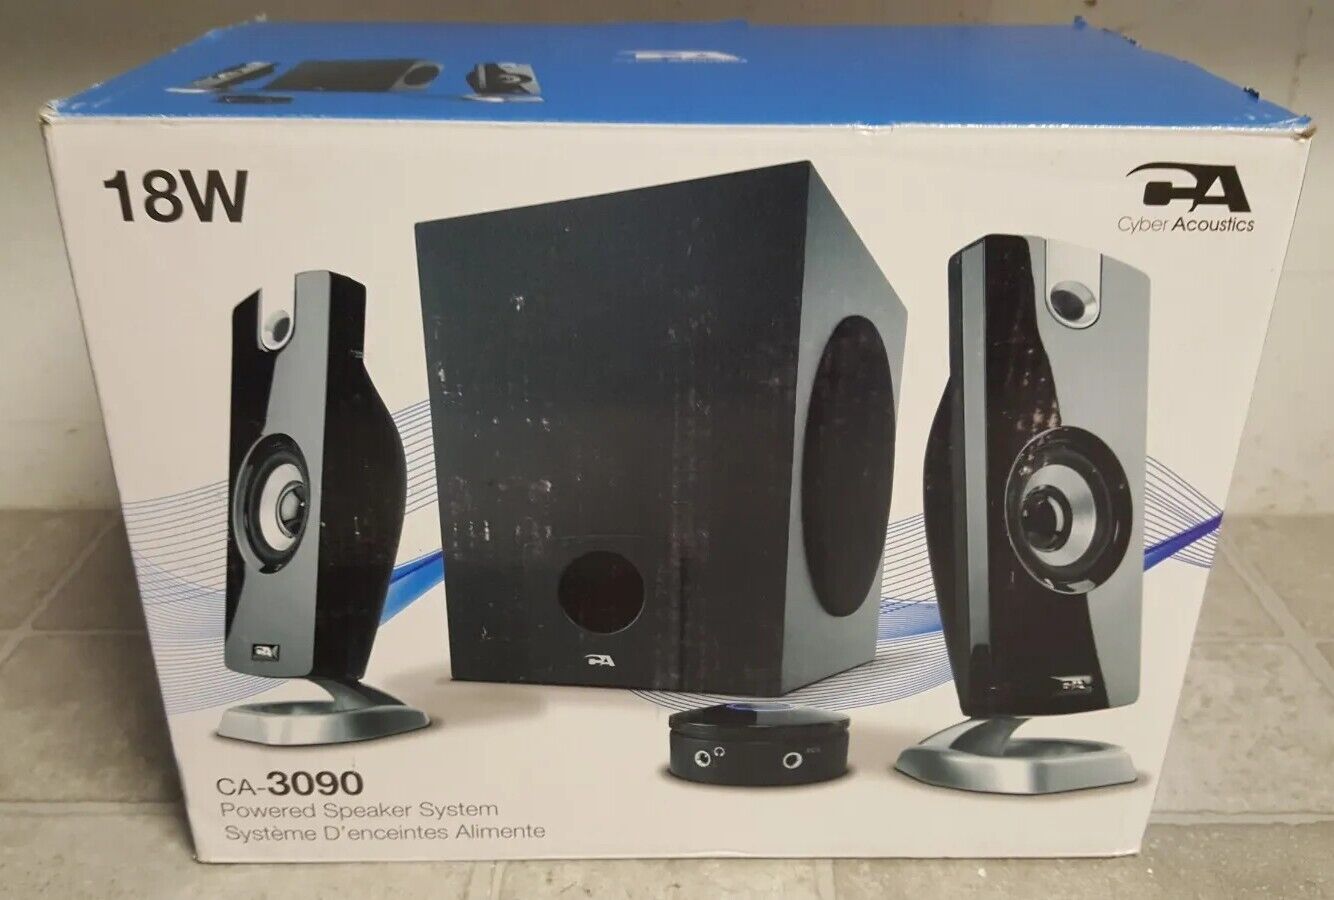 NEW OPEN BOX Cyber Acoustics 18W CA-3090 Computer Speakers